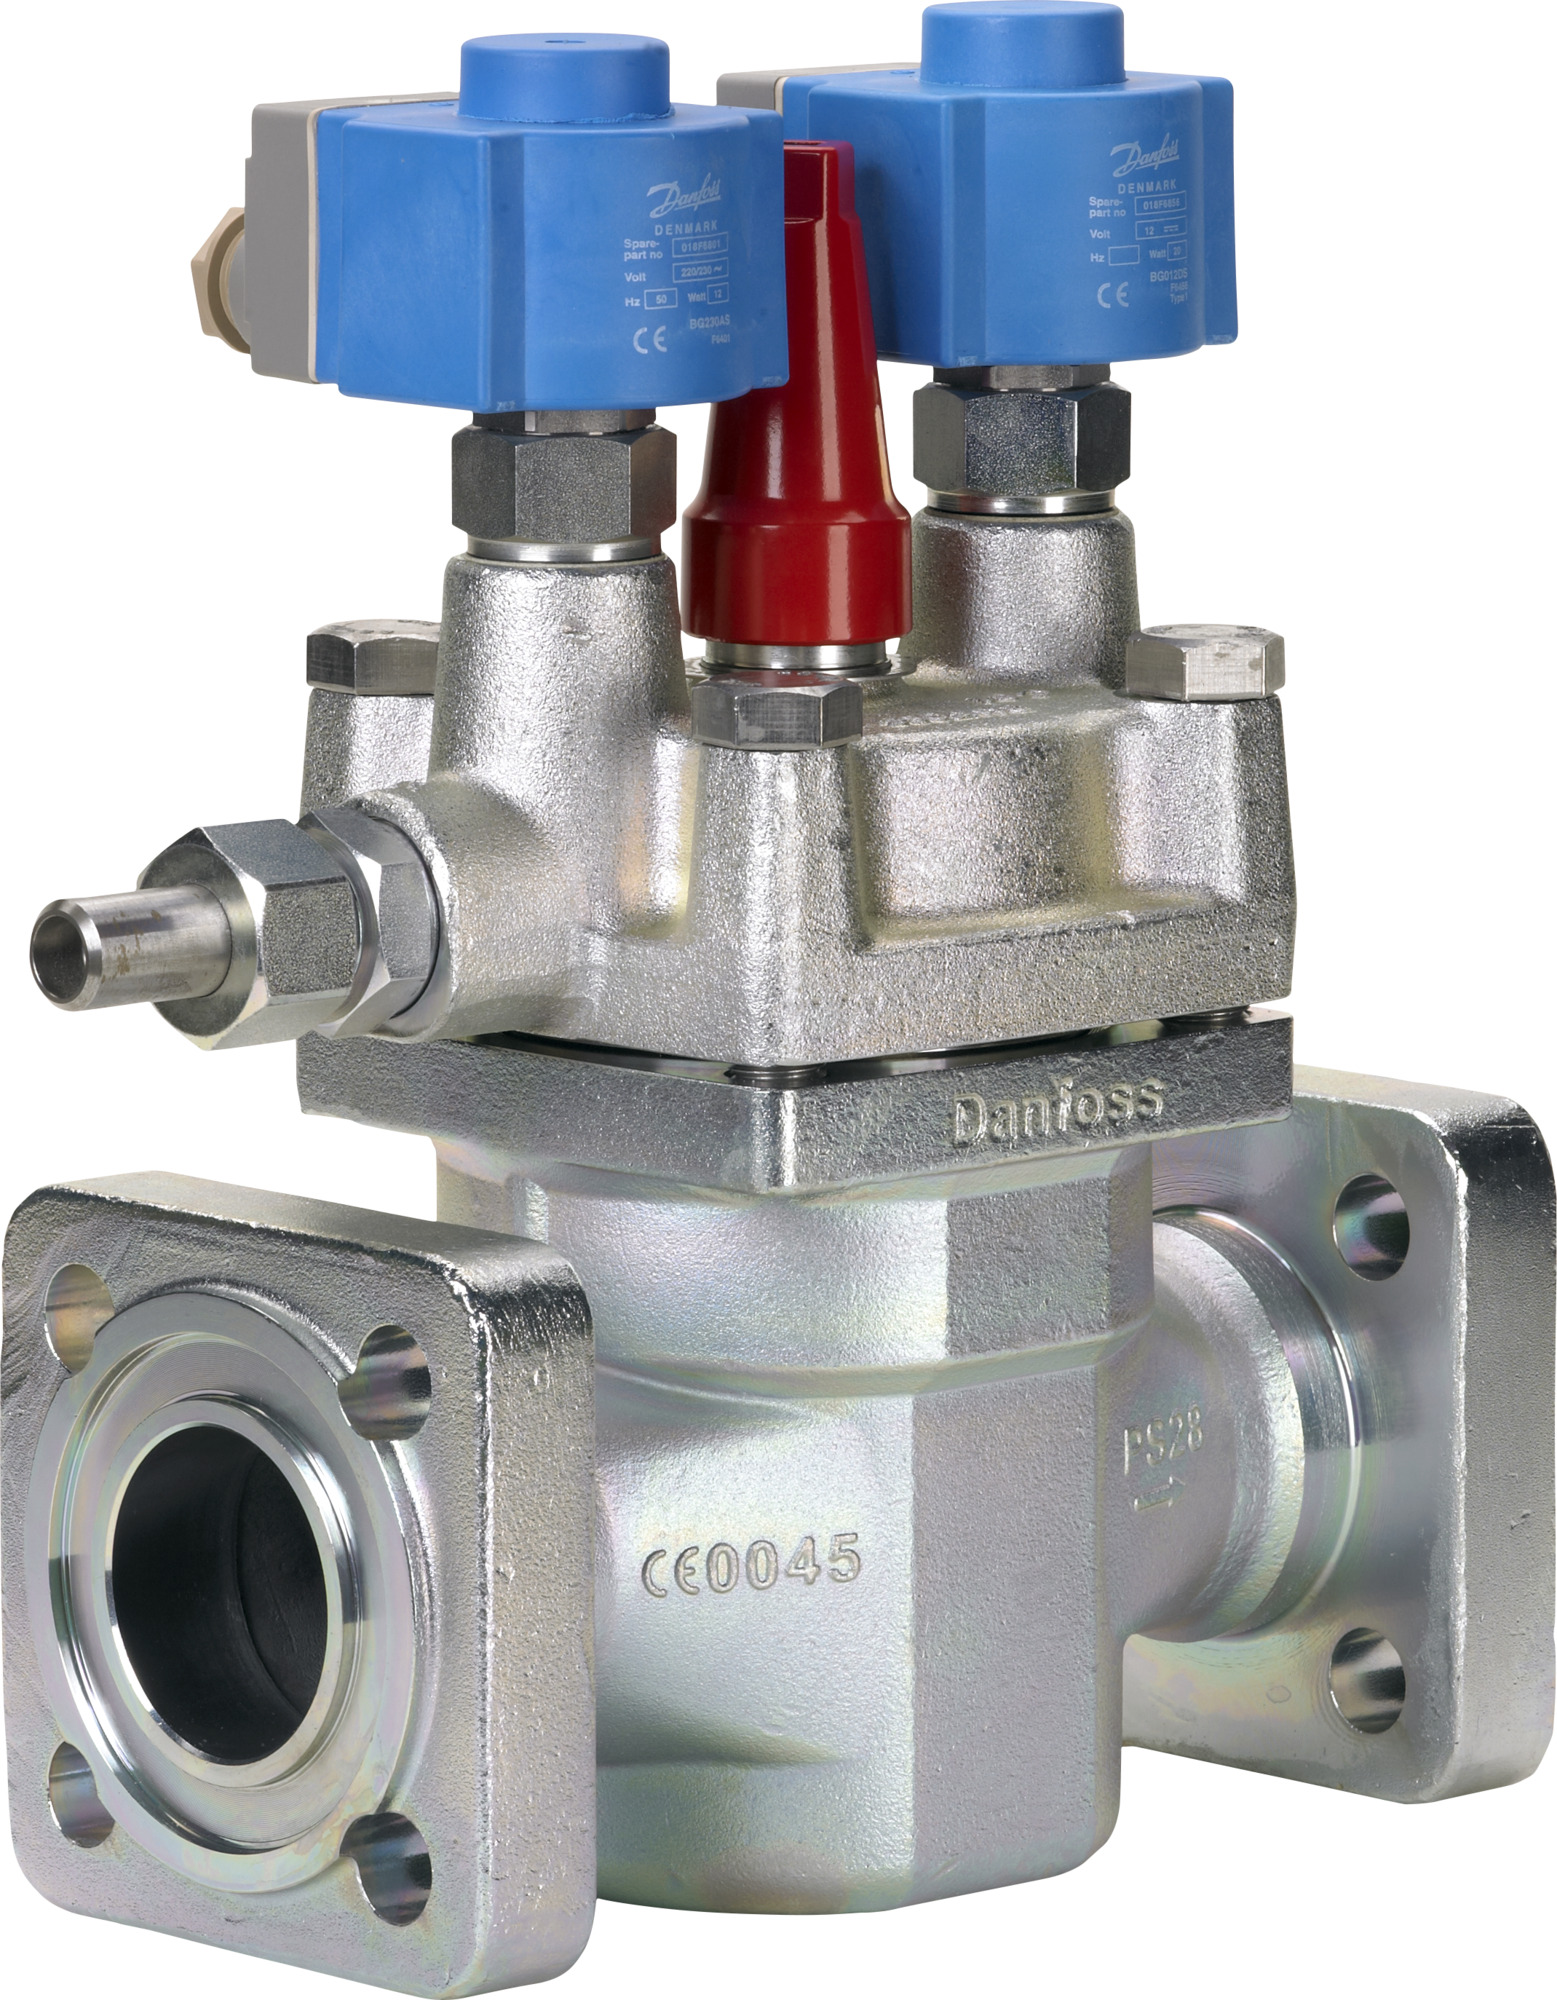 Multifunction valve body, ICV 50 PM, Flange